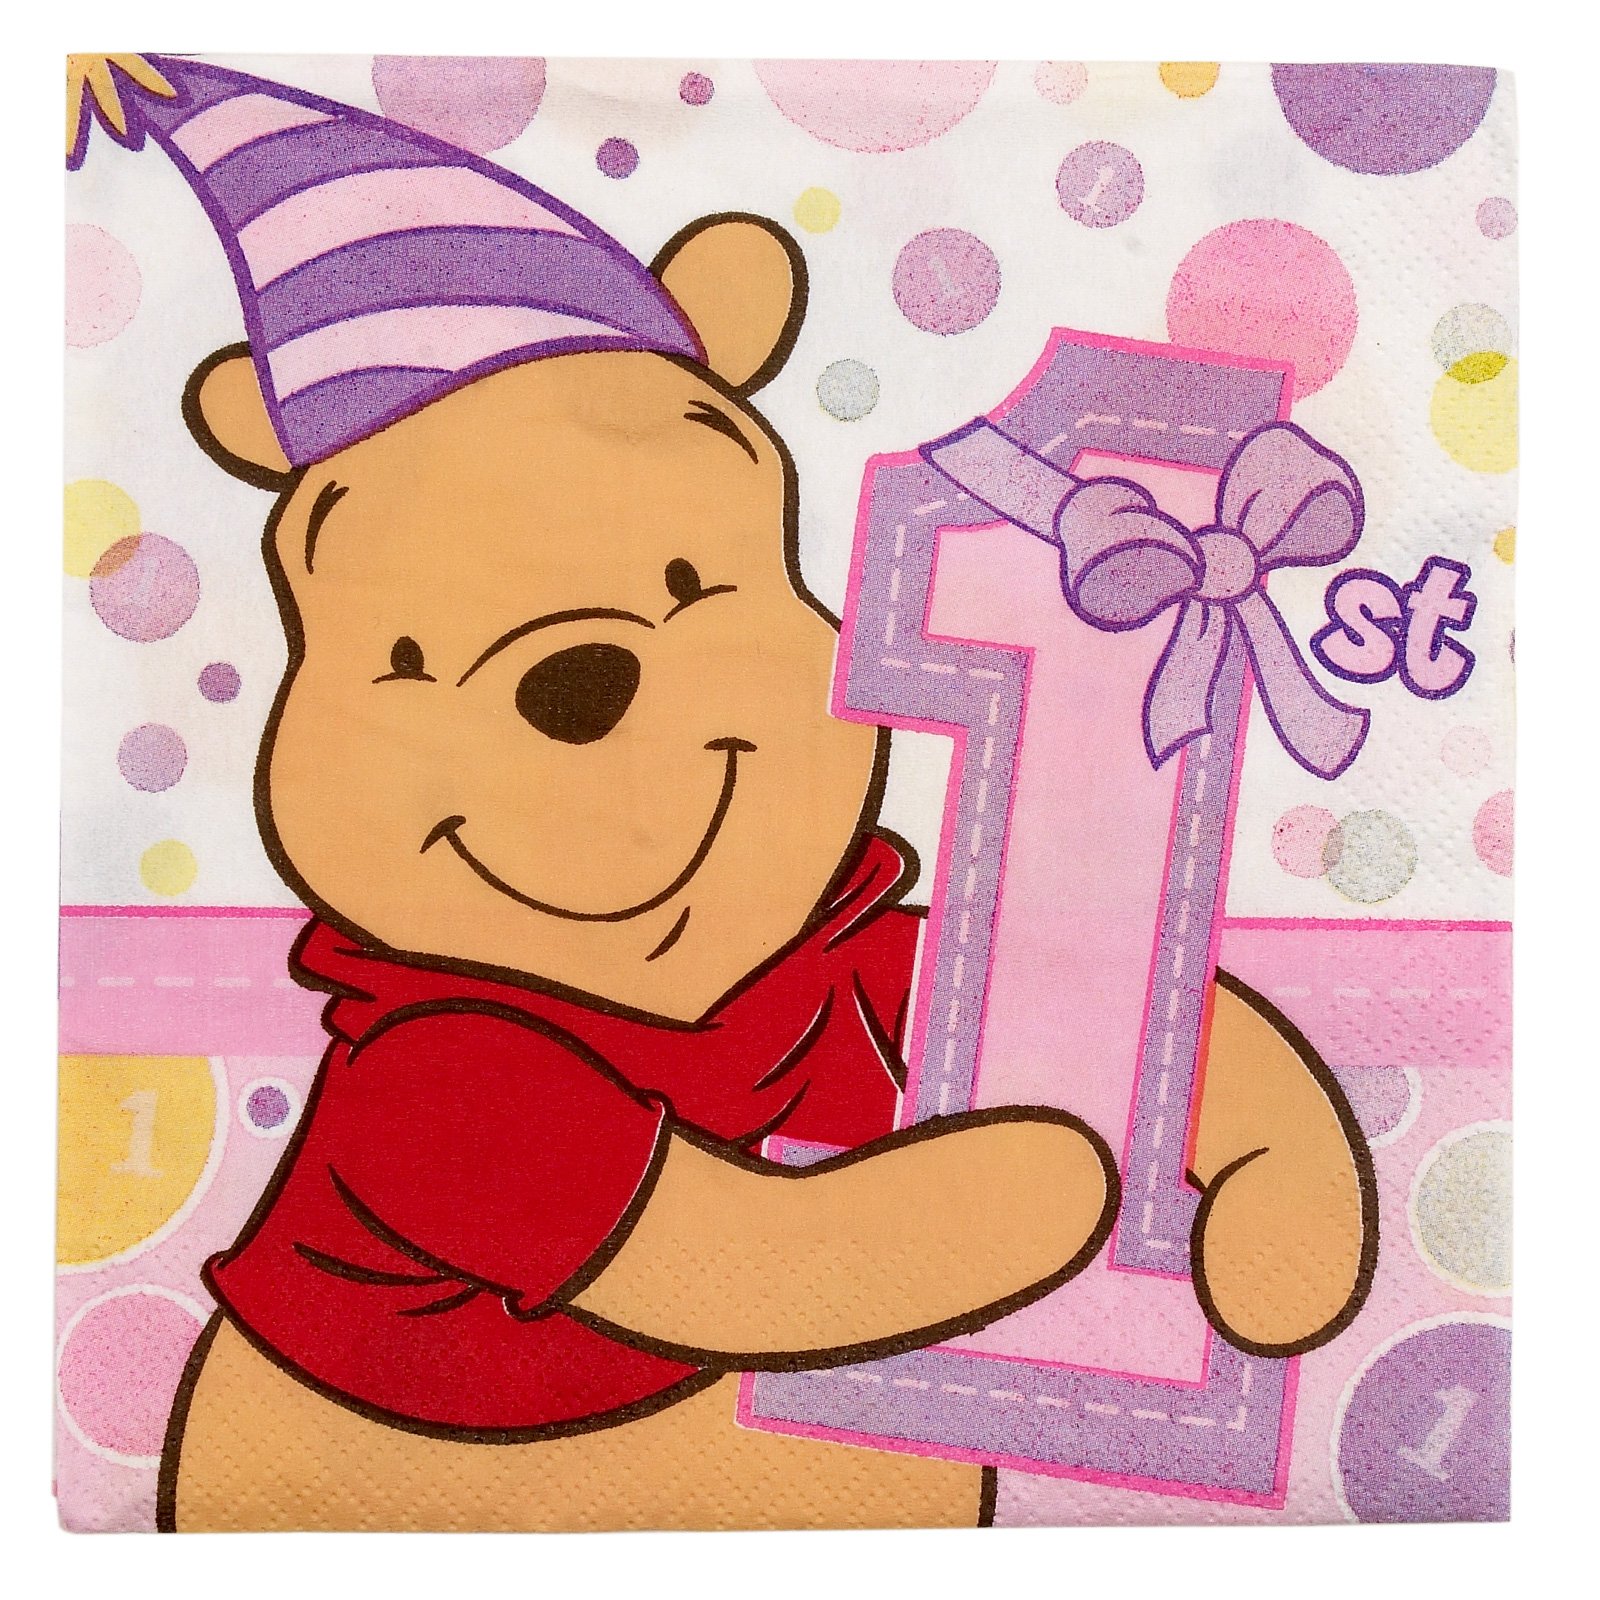     Pooh Birthday Graphics    Birthday Joys Birthday Graphics   